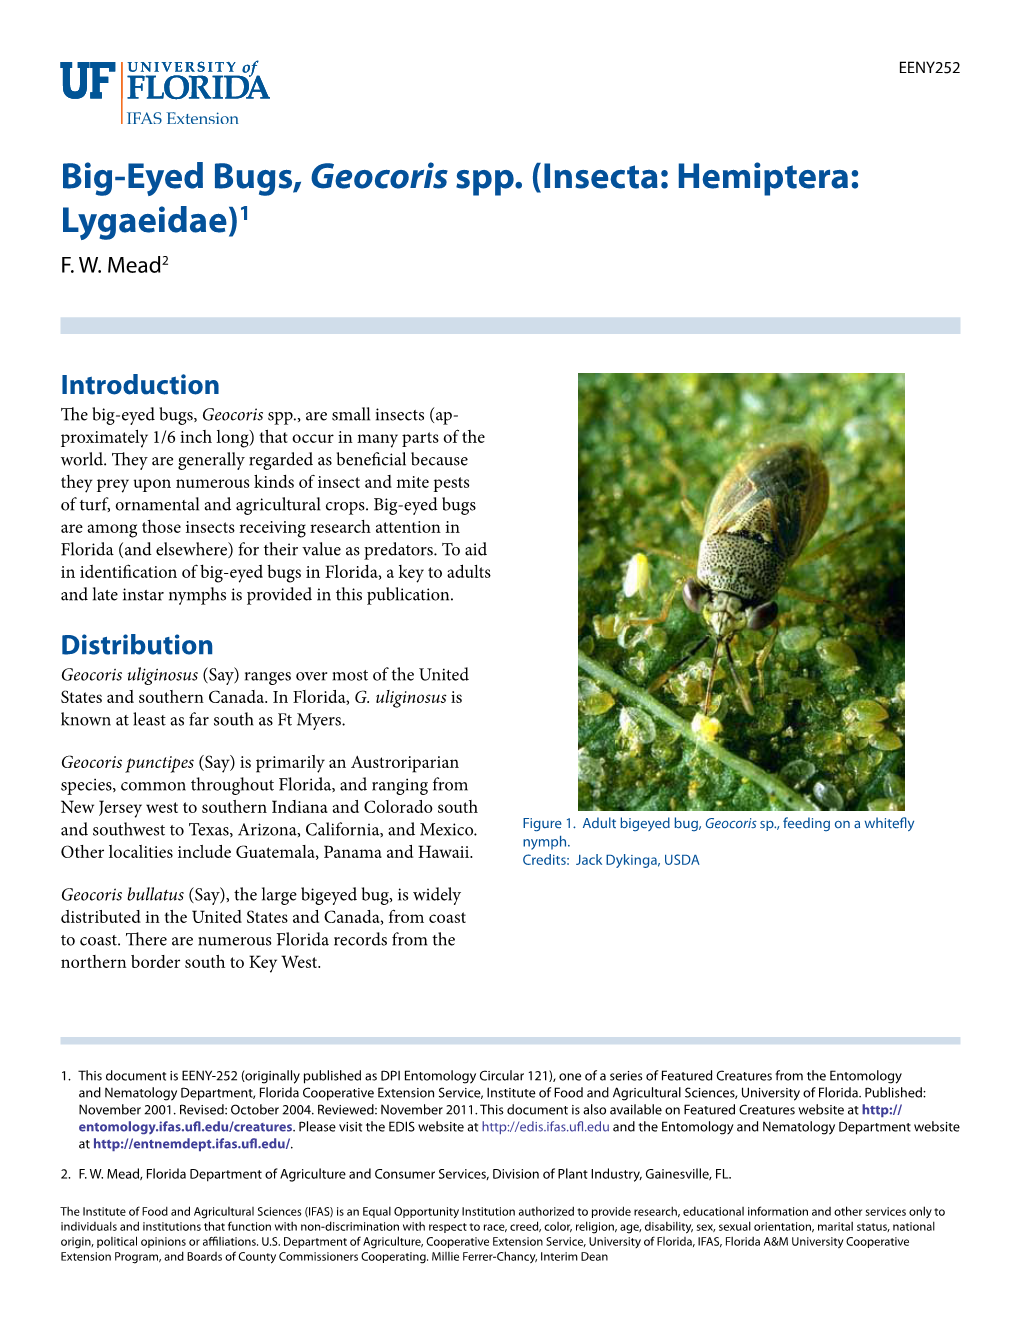 Big-Eyed Bugs, Geocoris Spp. (Insecta: Hemiptera: Lygaeidae)1 F